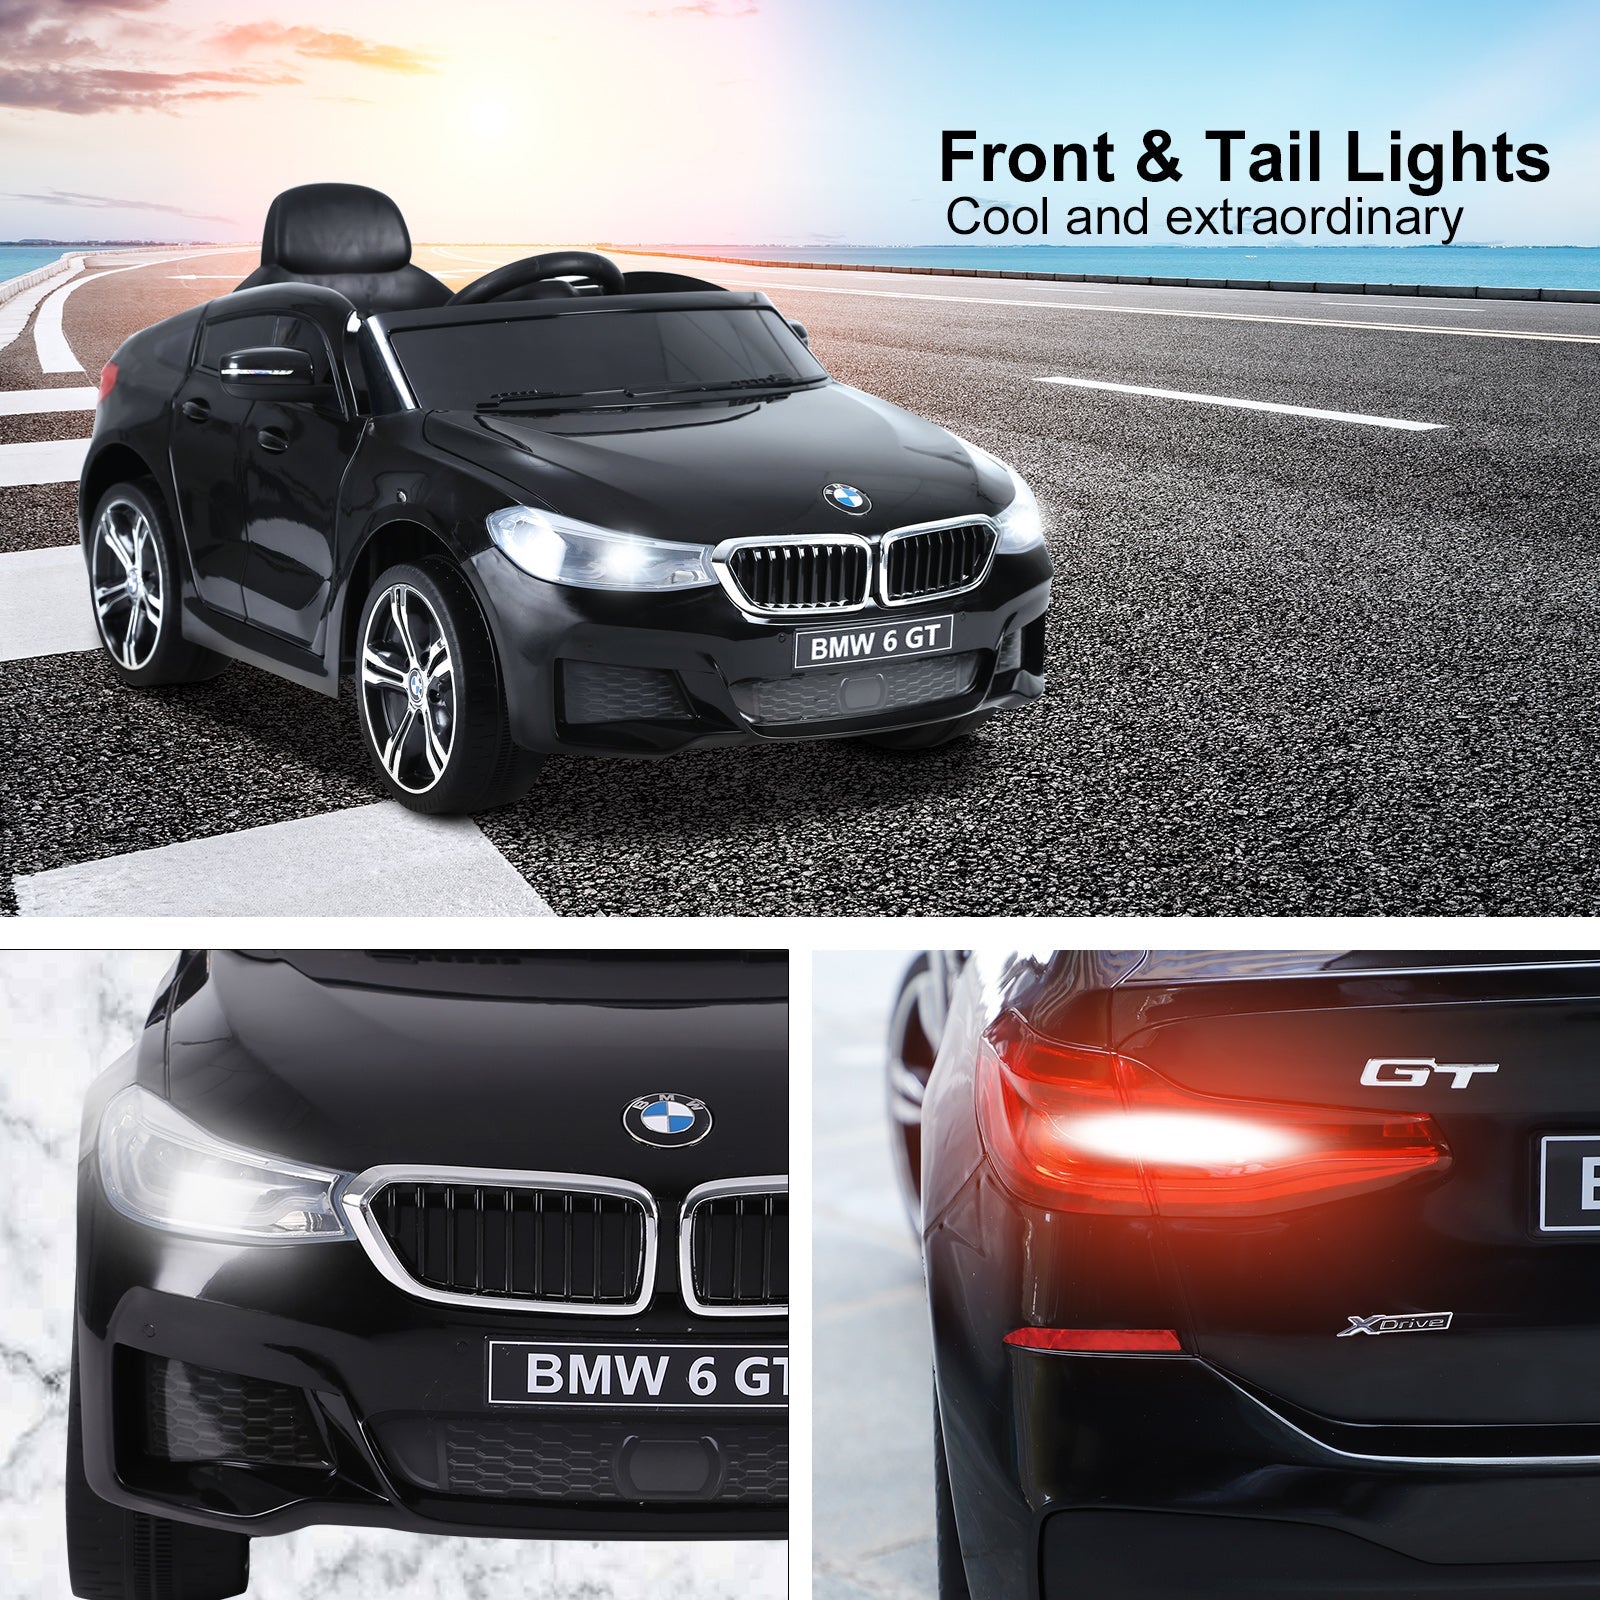 HOMCOM Licensed BMW 6GT 6V Kids Electric Ride On Car with Remote Control - Black - maplin.co.uk